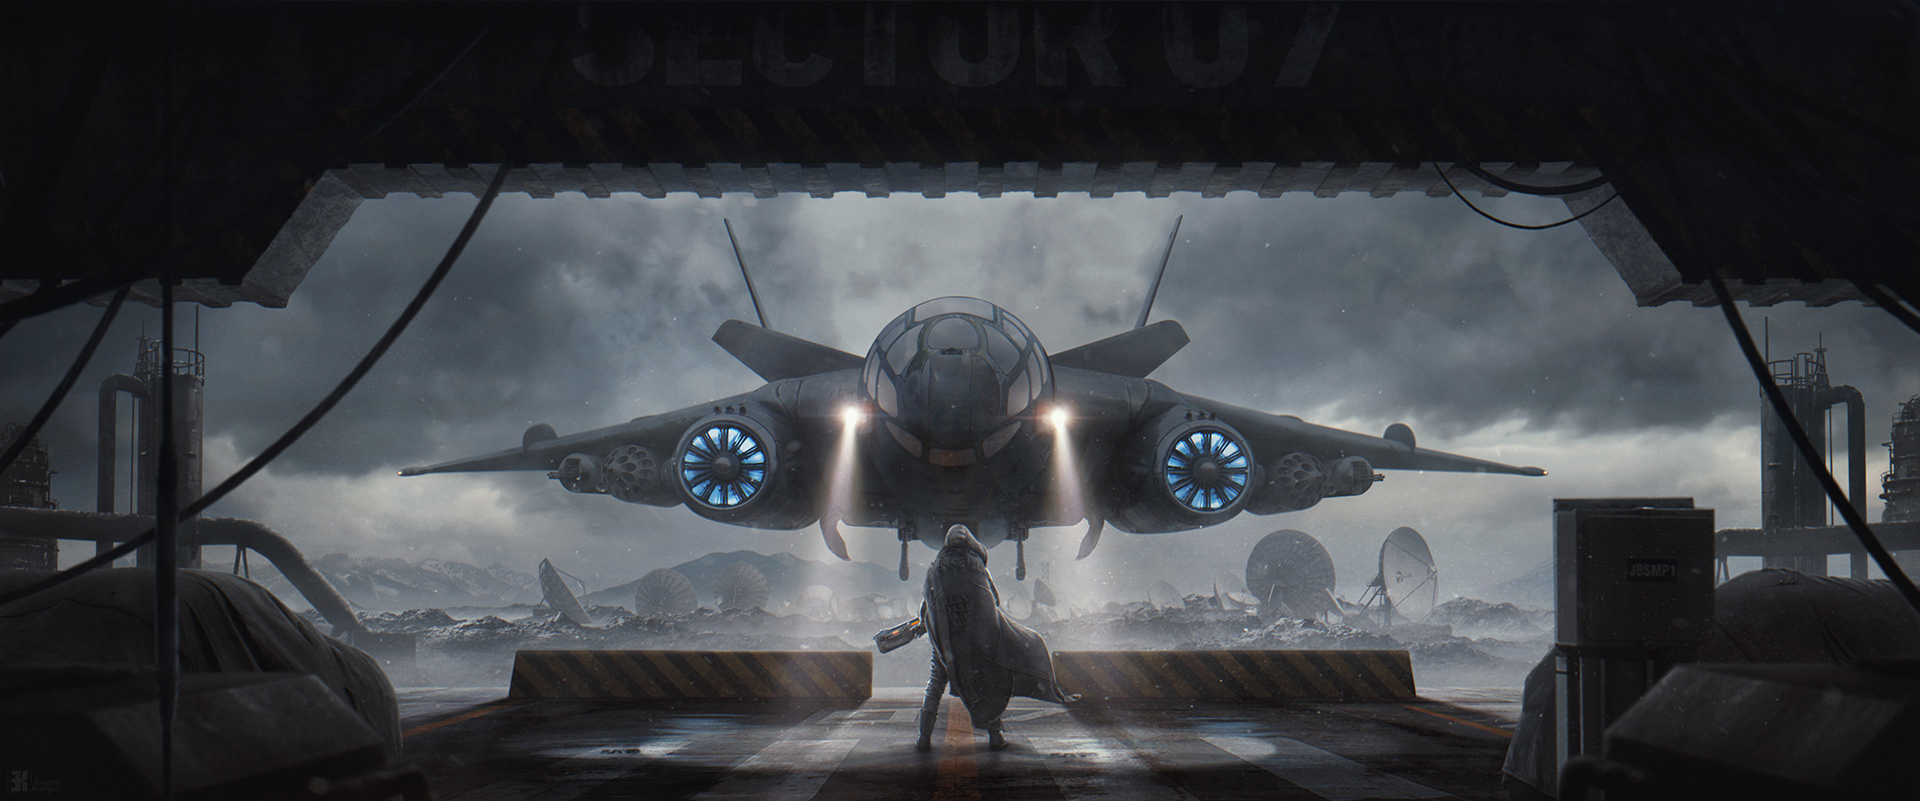 Futuristic Artwork Drawing Warrior Spaceship Concept Art Science Fiction Evgenij Kungur 2D Cyberpunk 1920x801